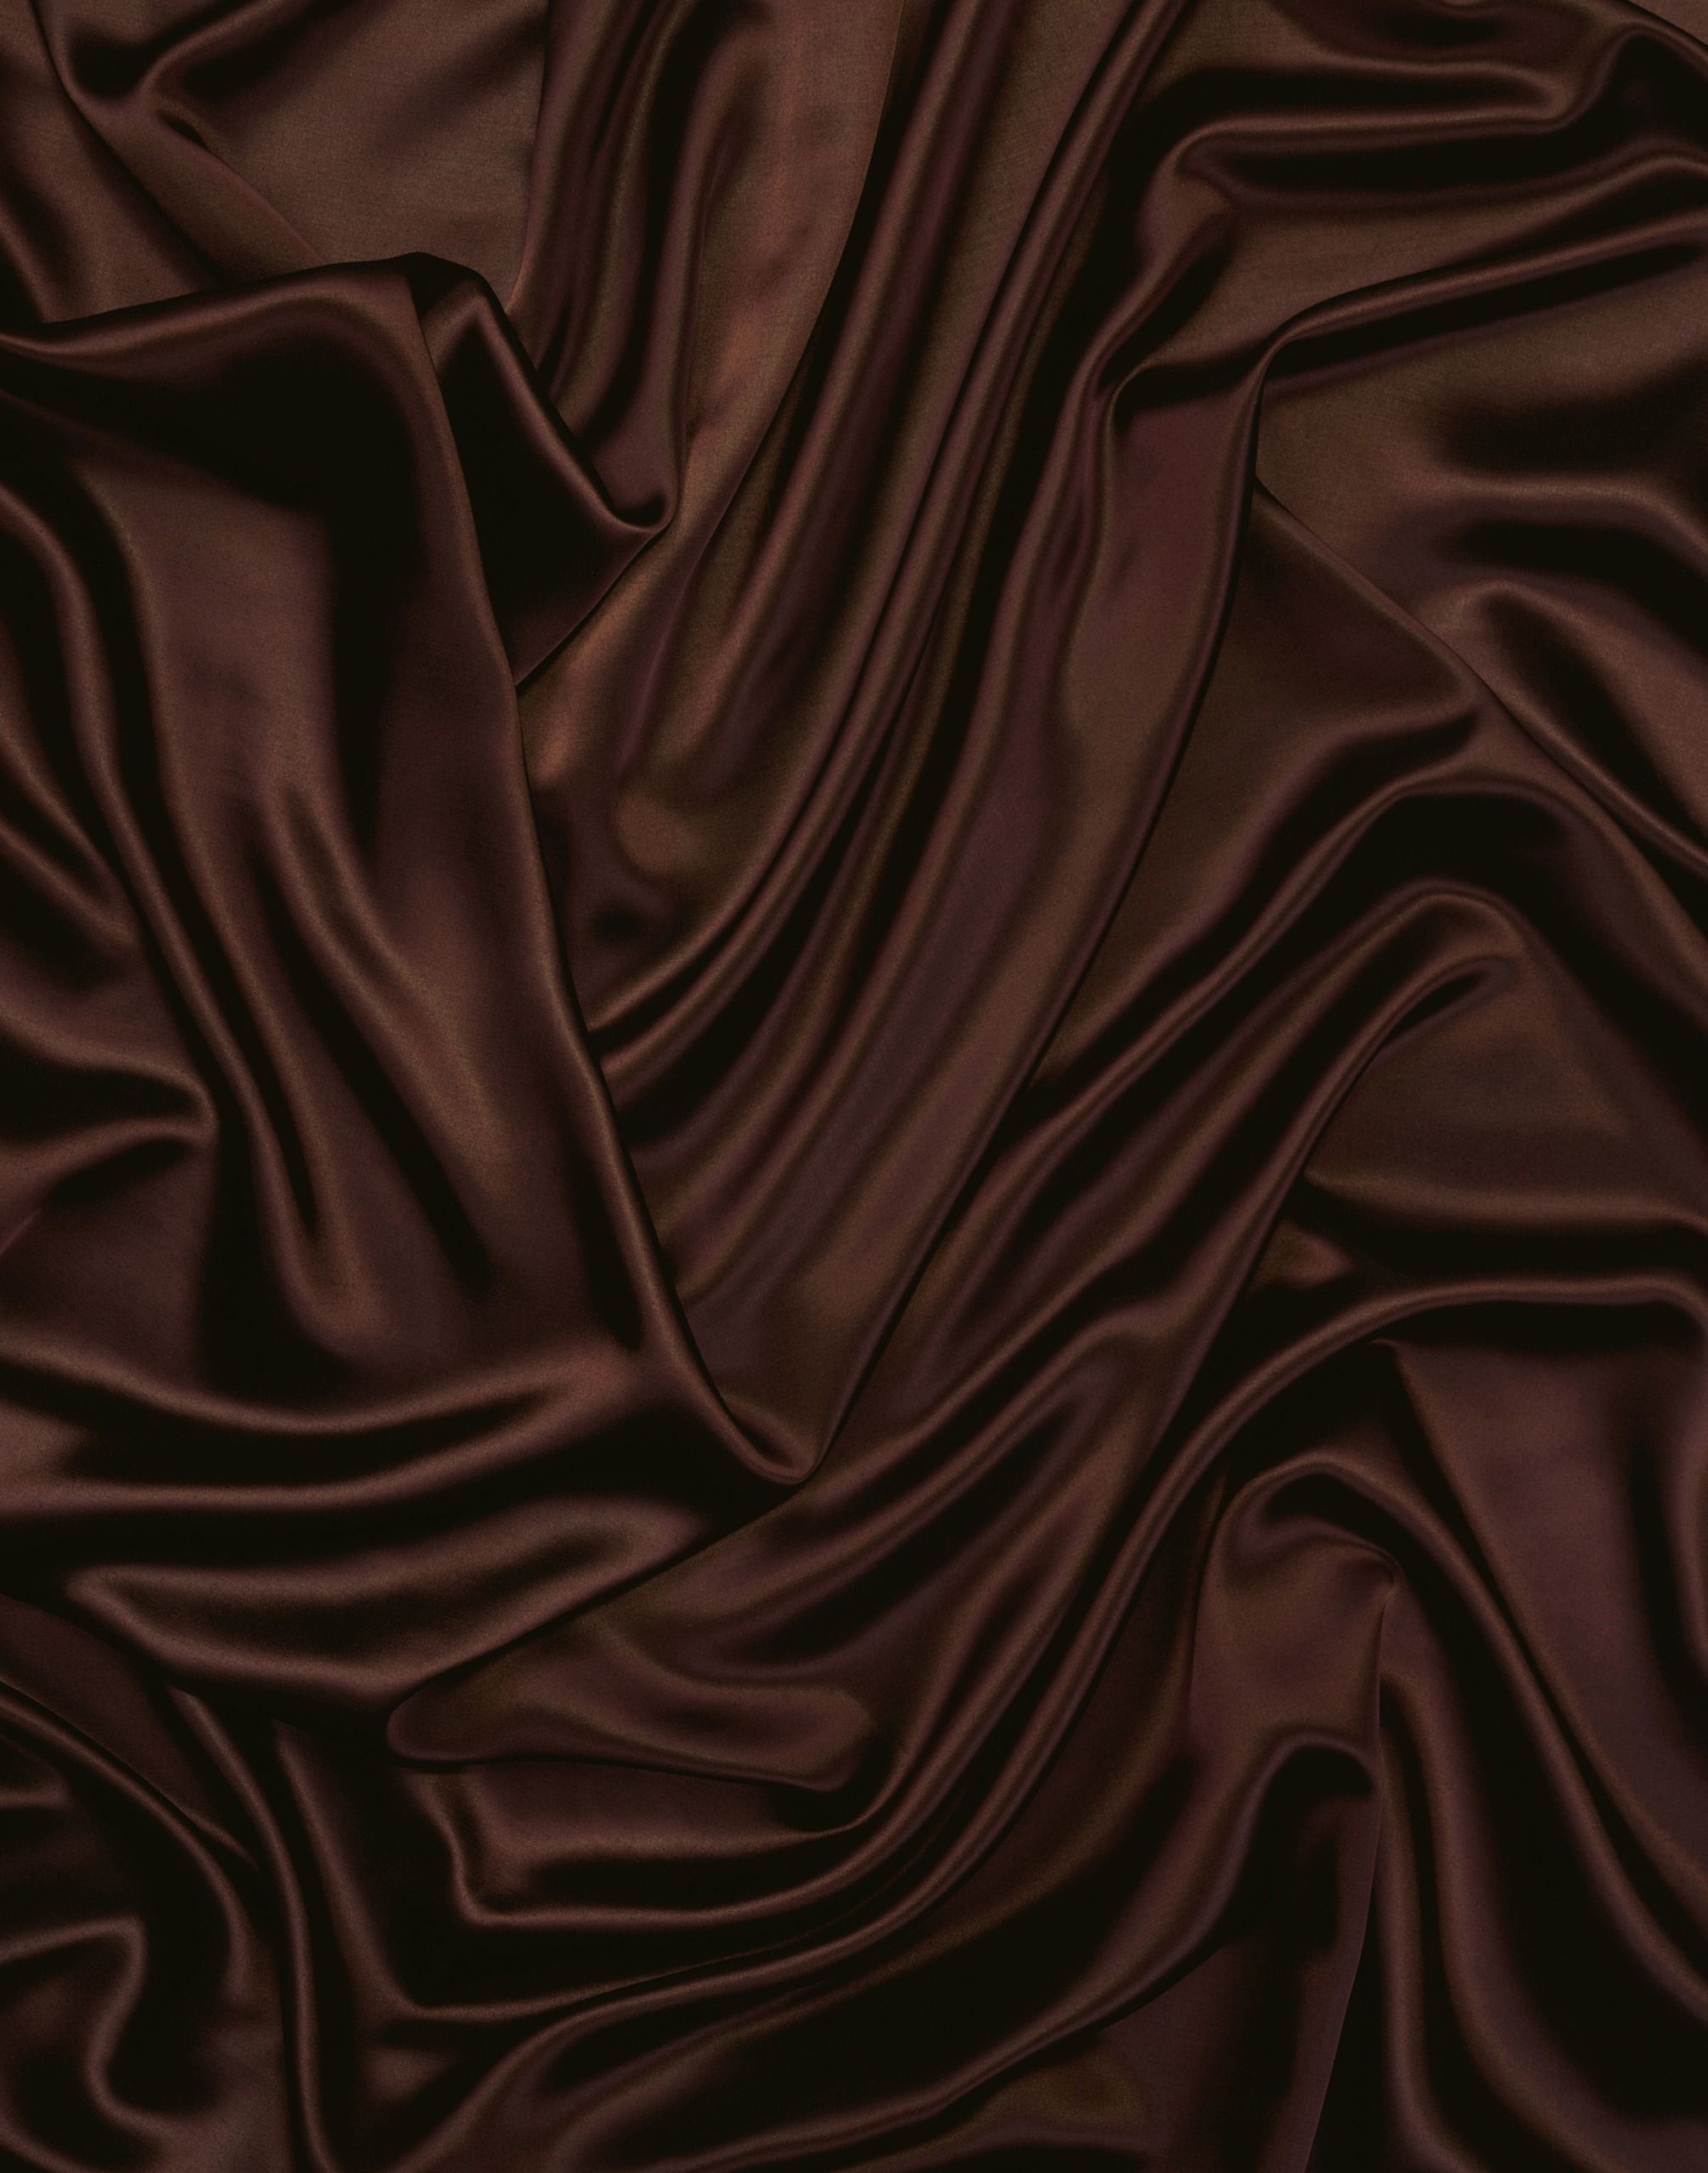 A close up of a dark brown silk material - Silk